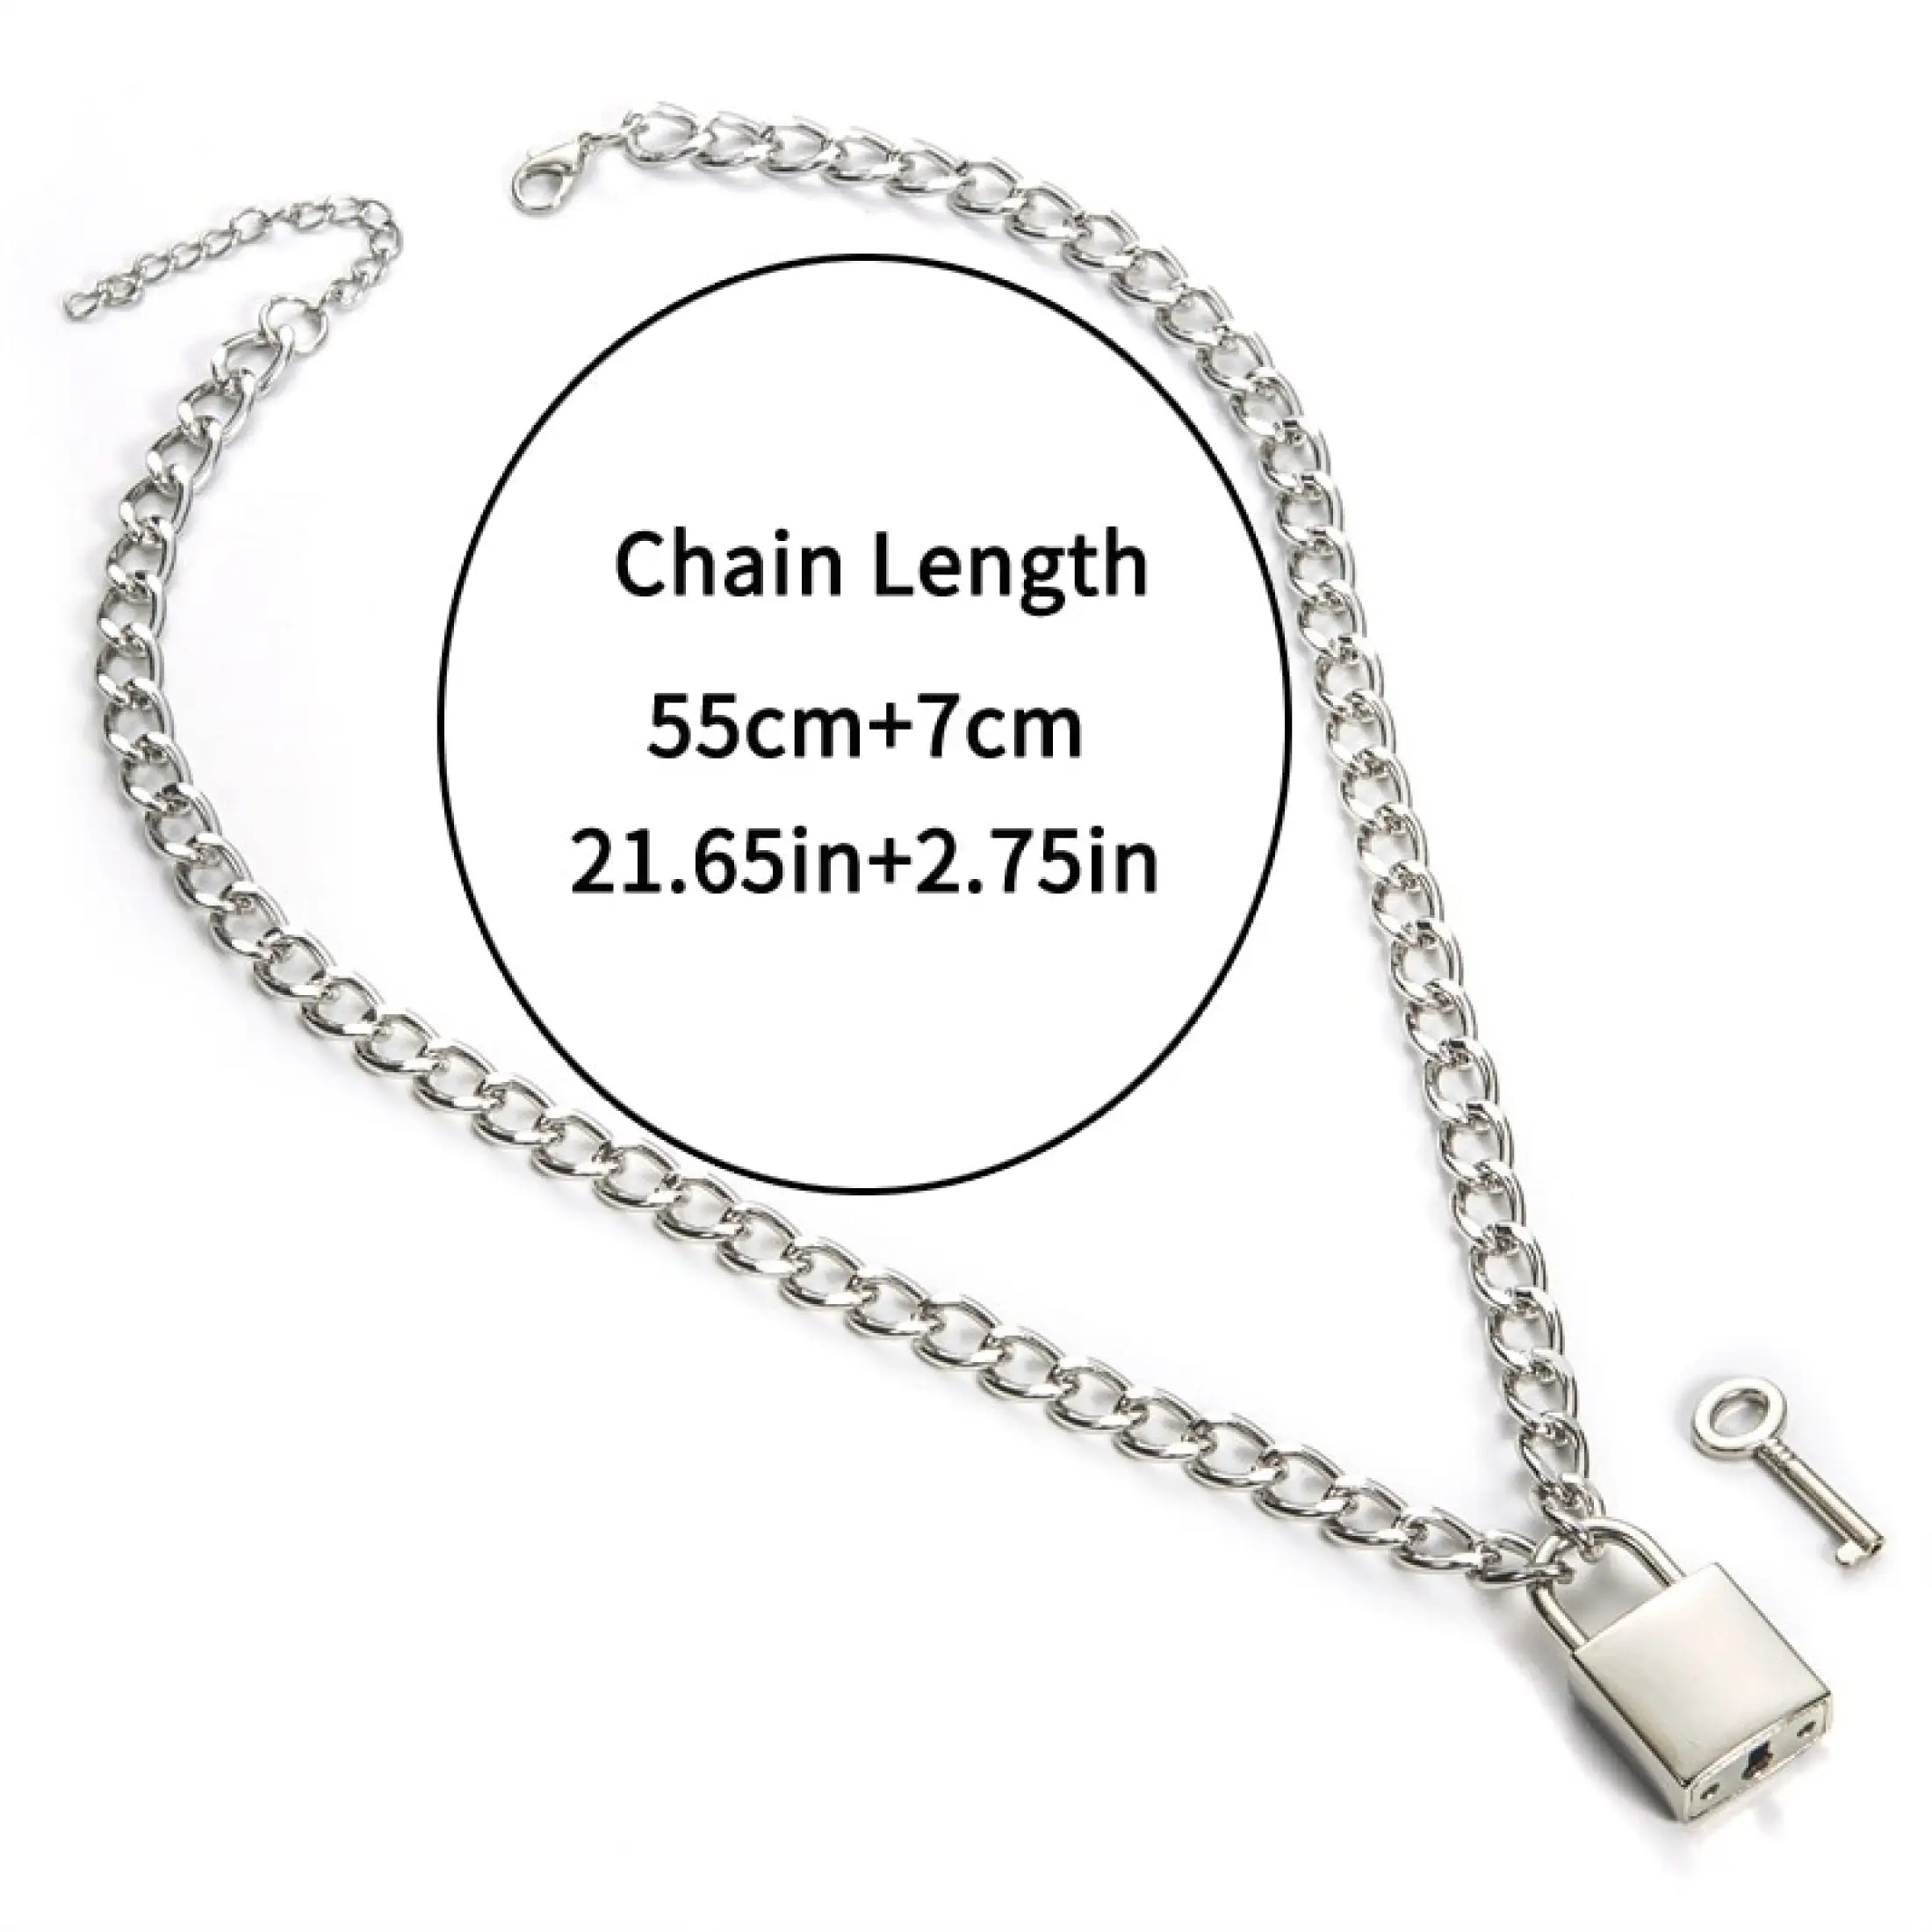 Egirl lock necklace